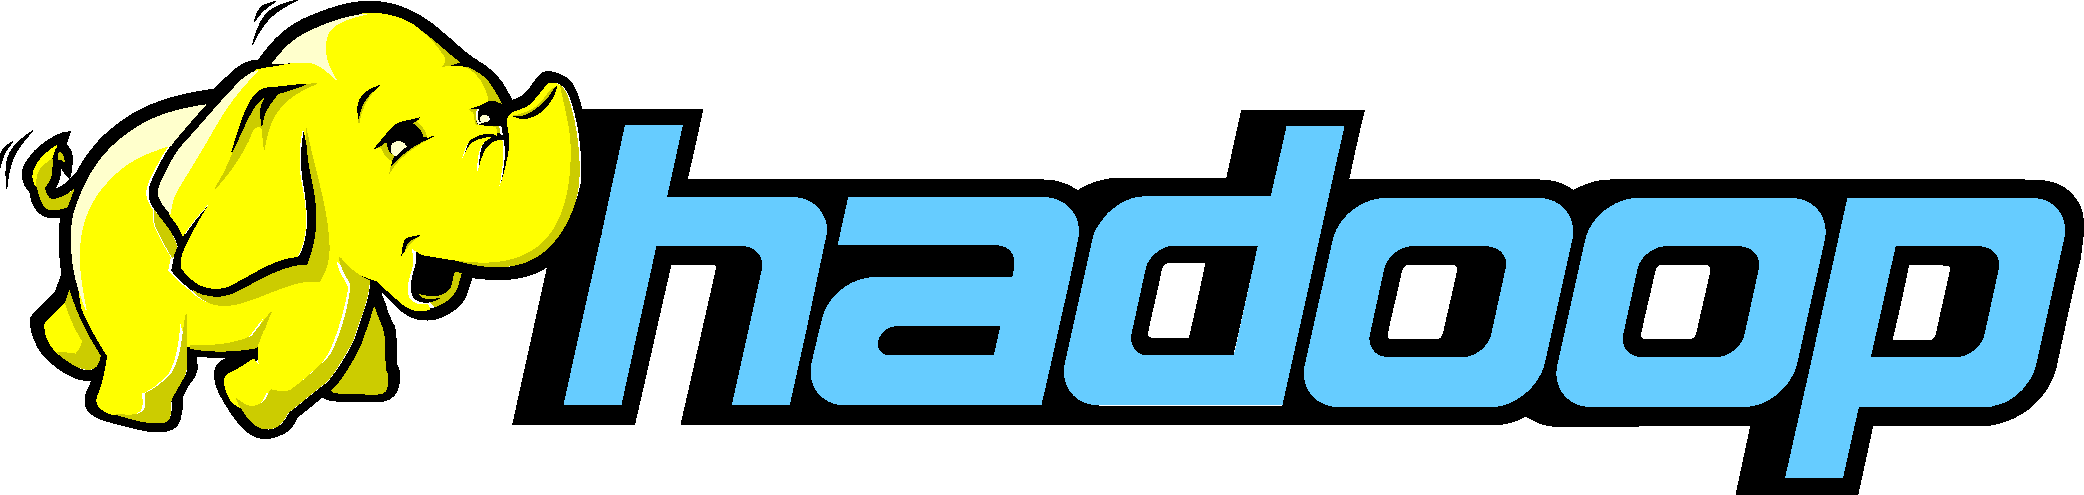 Hadoop Logo png